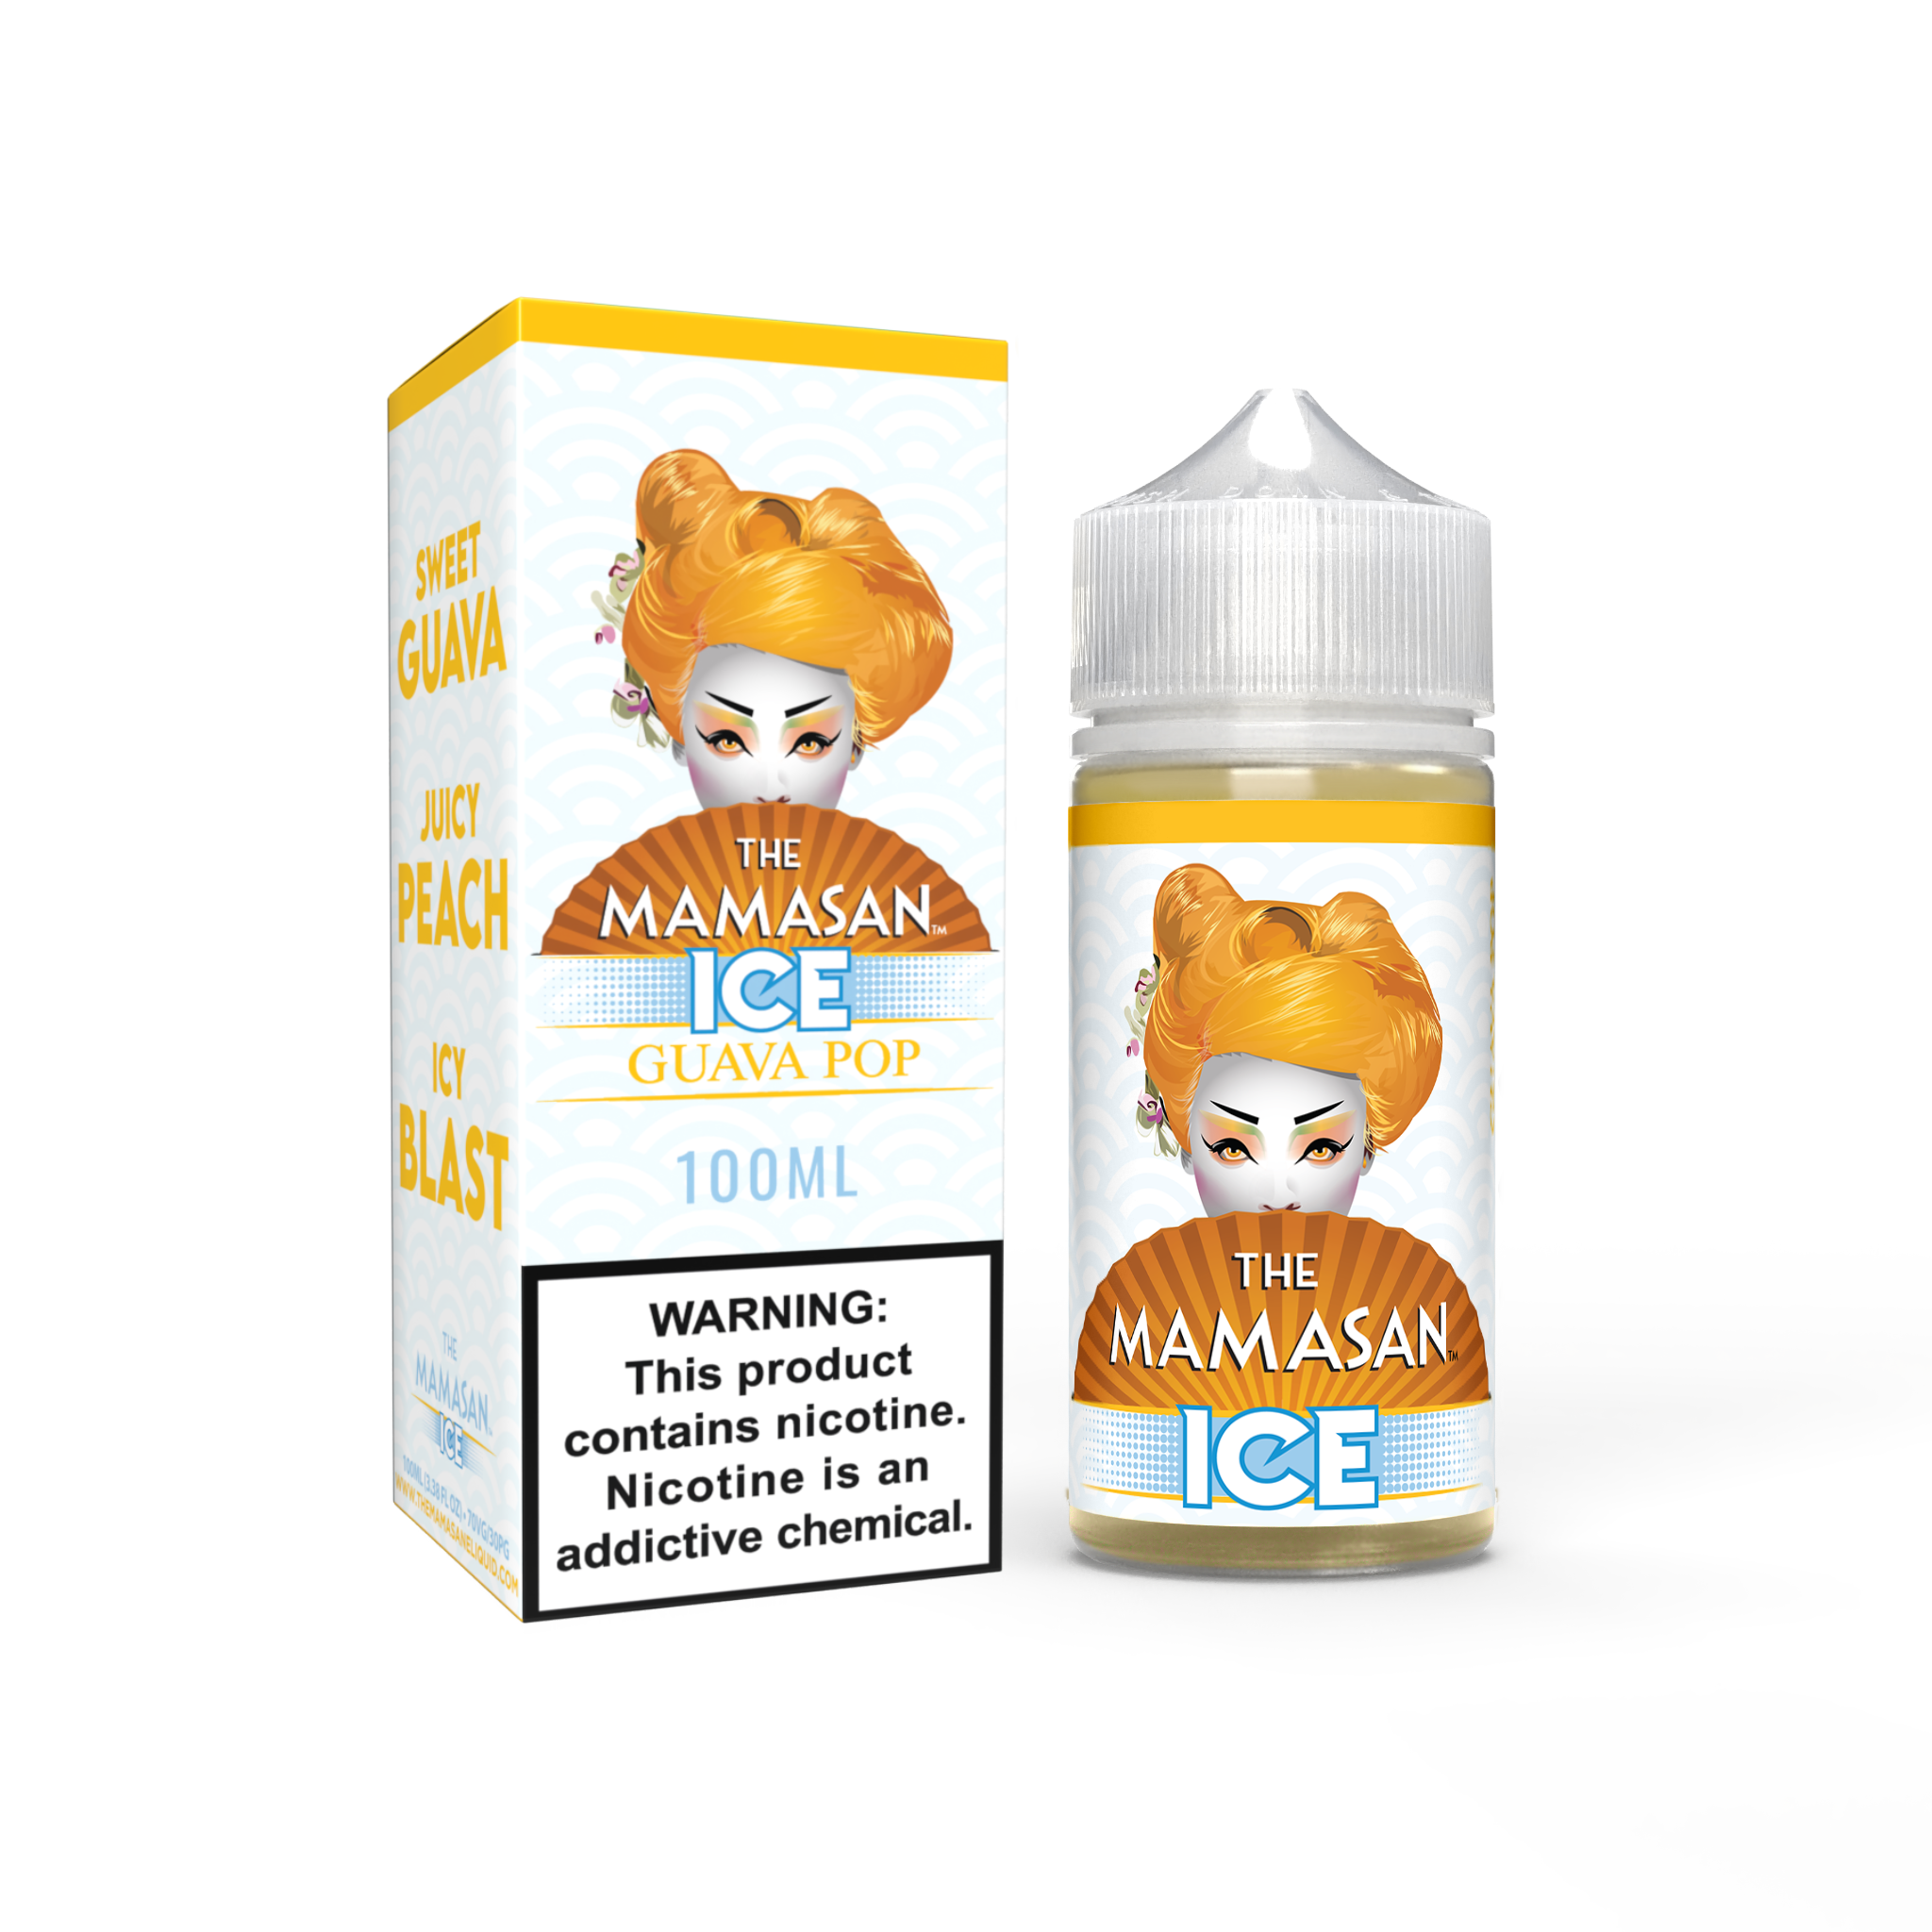 The Mamasan 100mL Vape Juice Best Flavor Guava Pop Ice